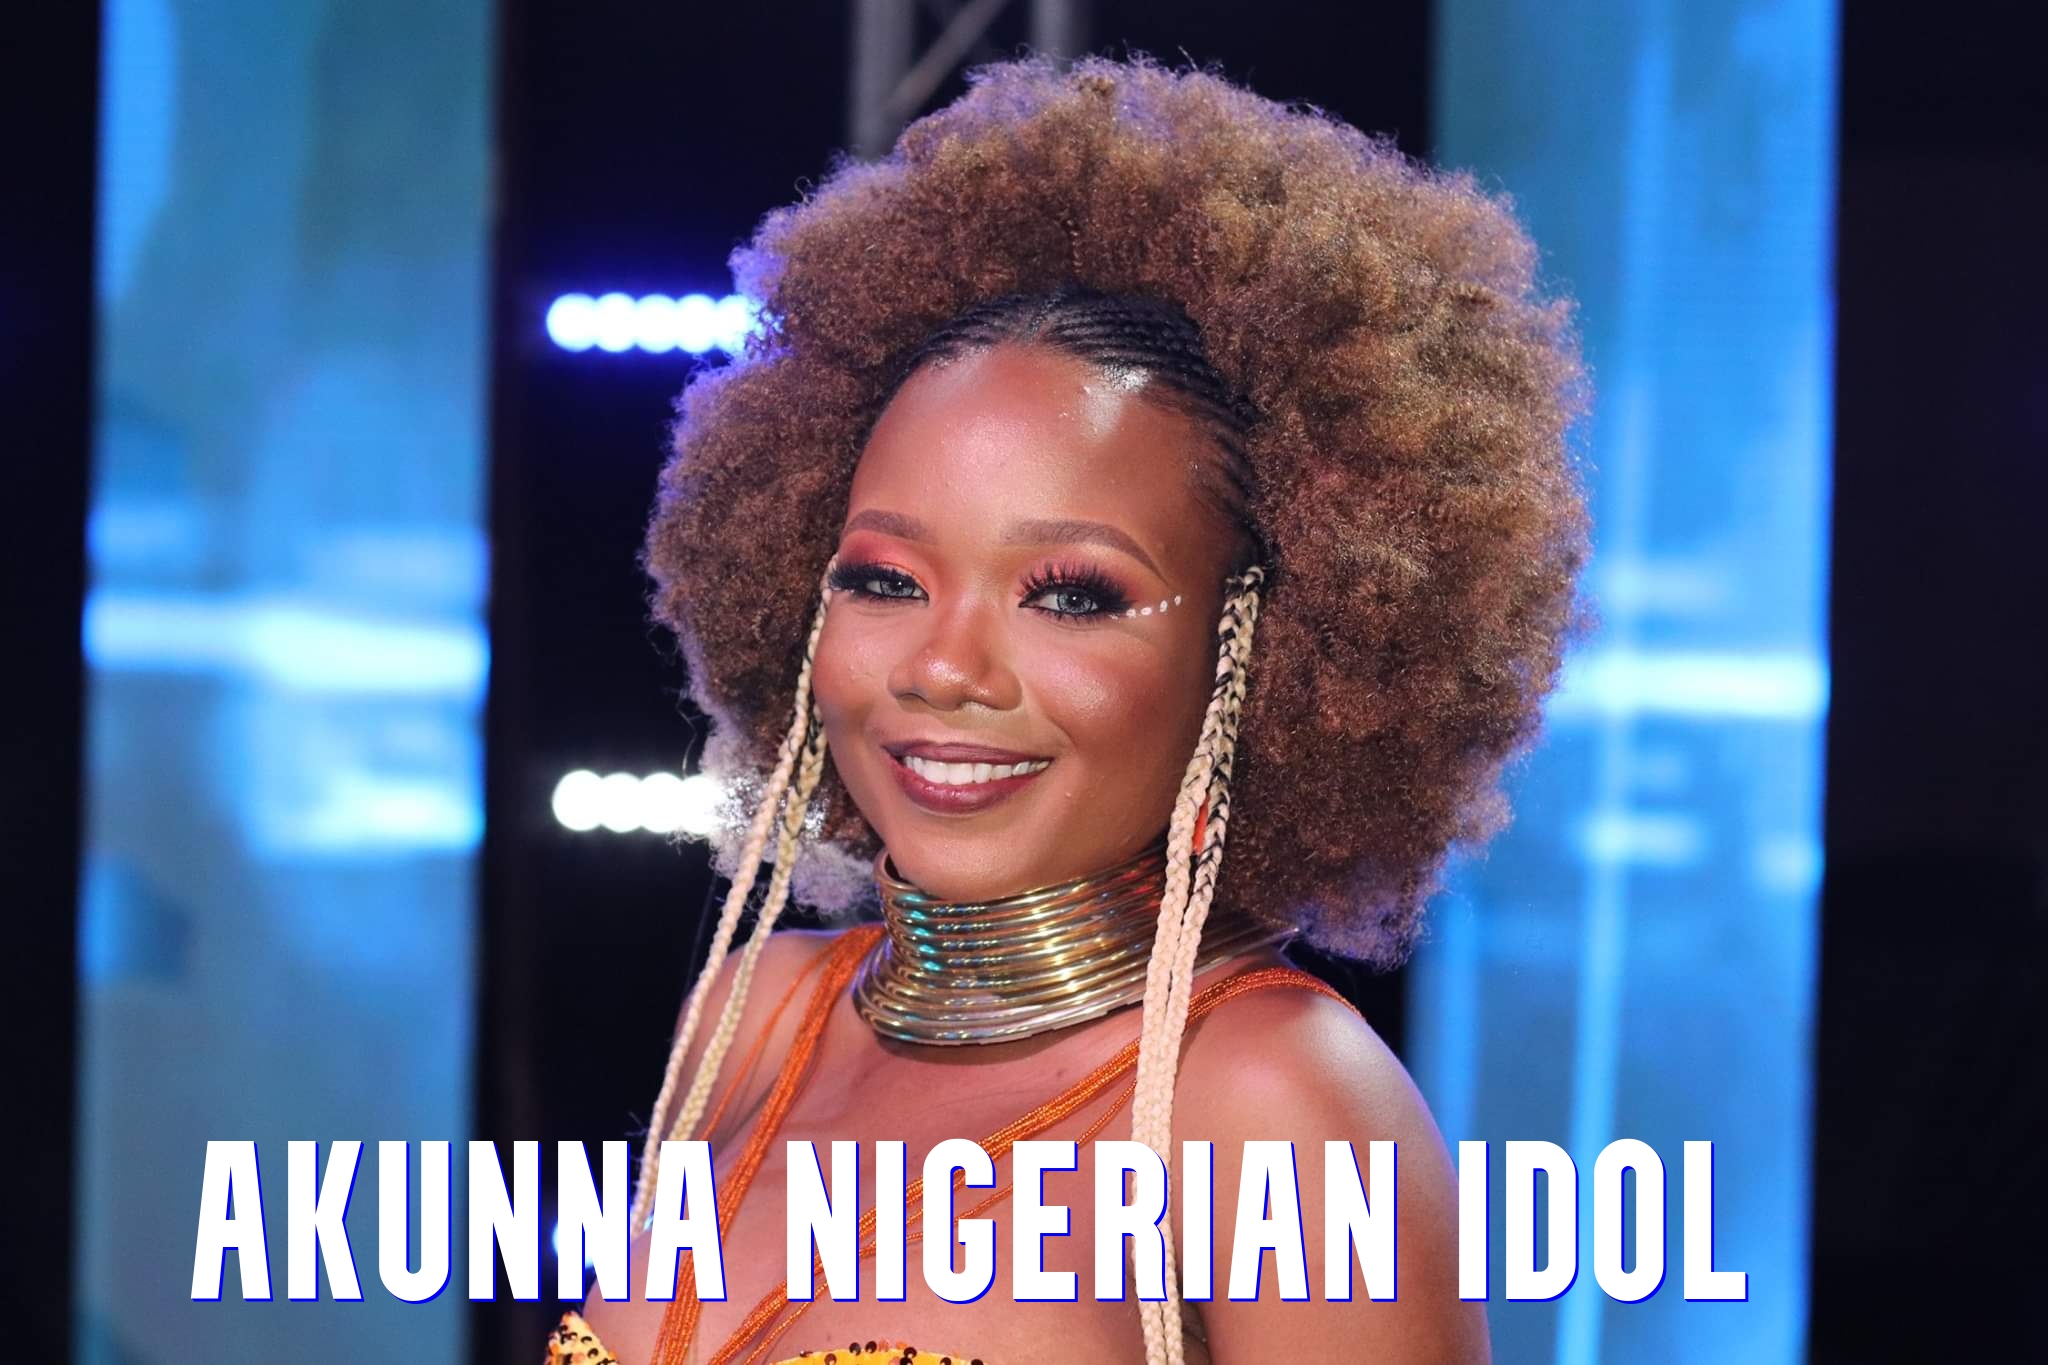 Akunna Nigerian Idol Biography